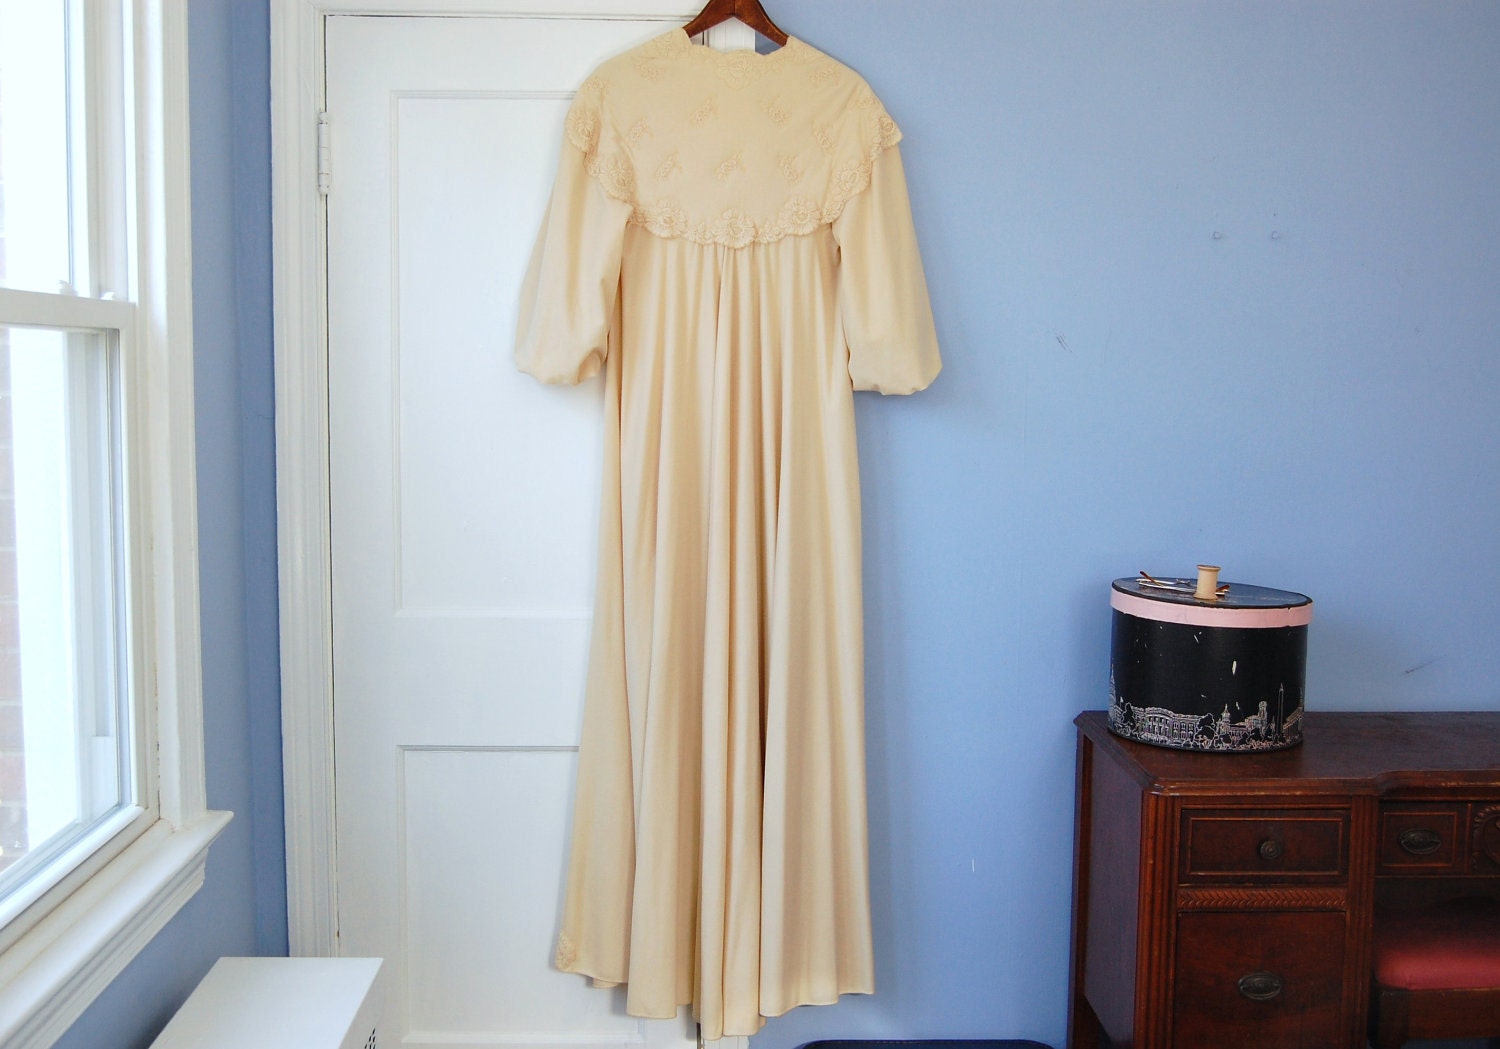 Vanity Fair Vintage Robe Full Length Dressing Gown Camel Tan Floral Lace Trimmed Duster Sleepwear